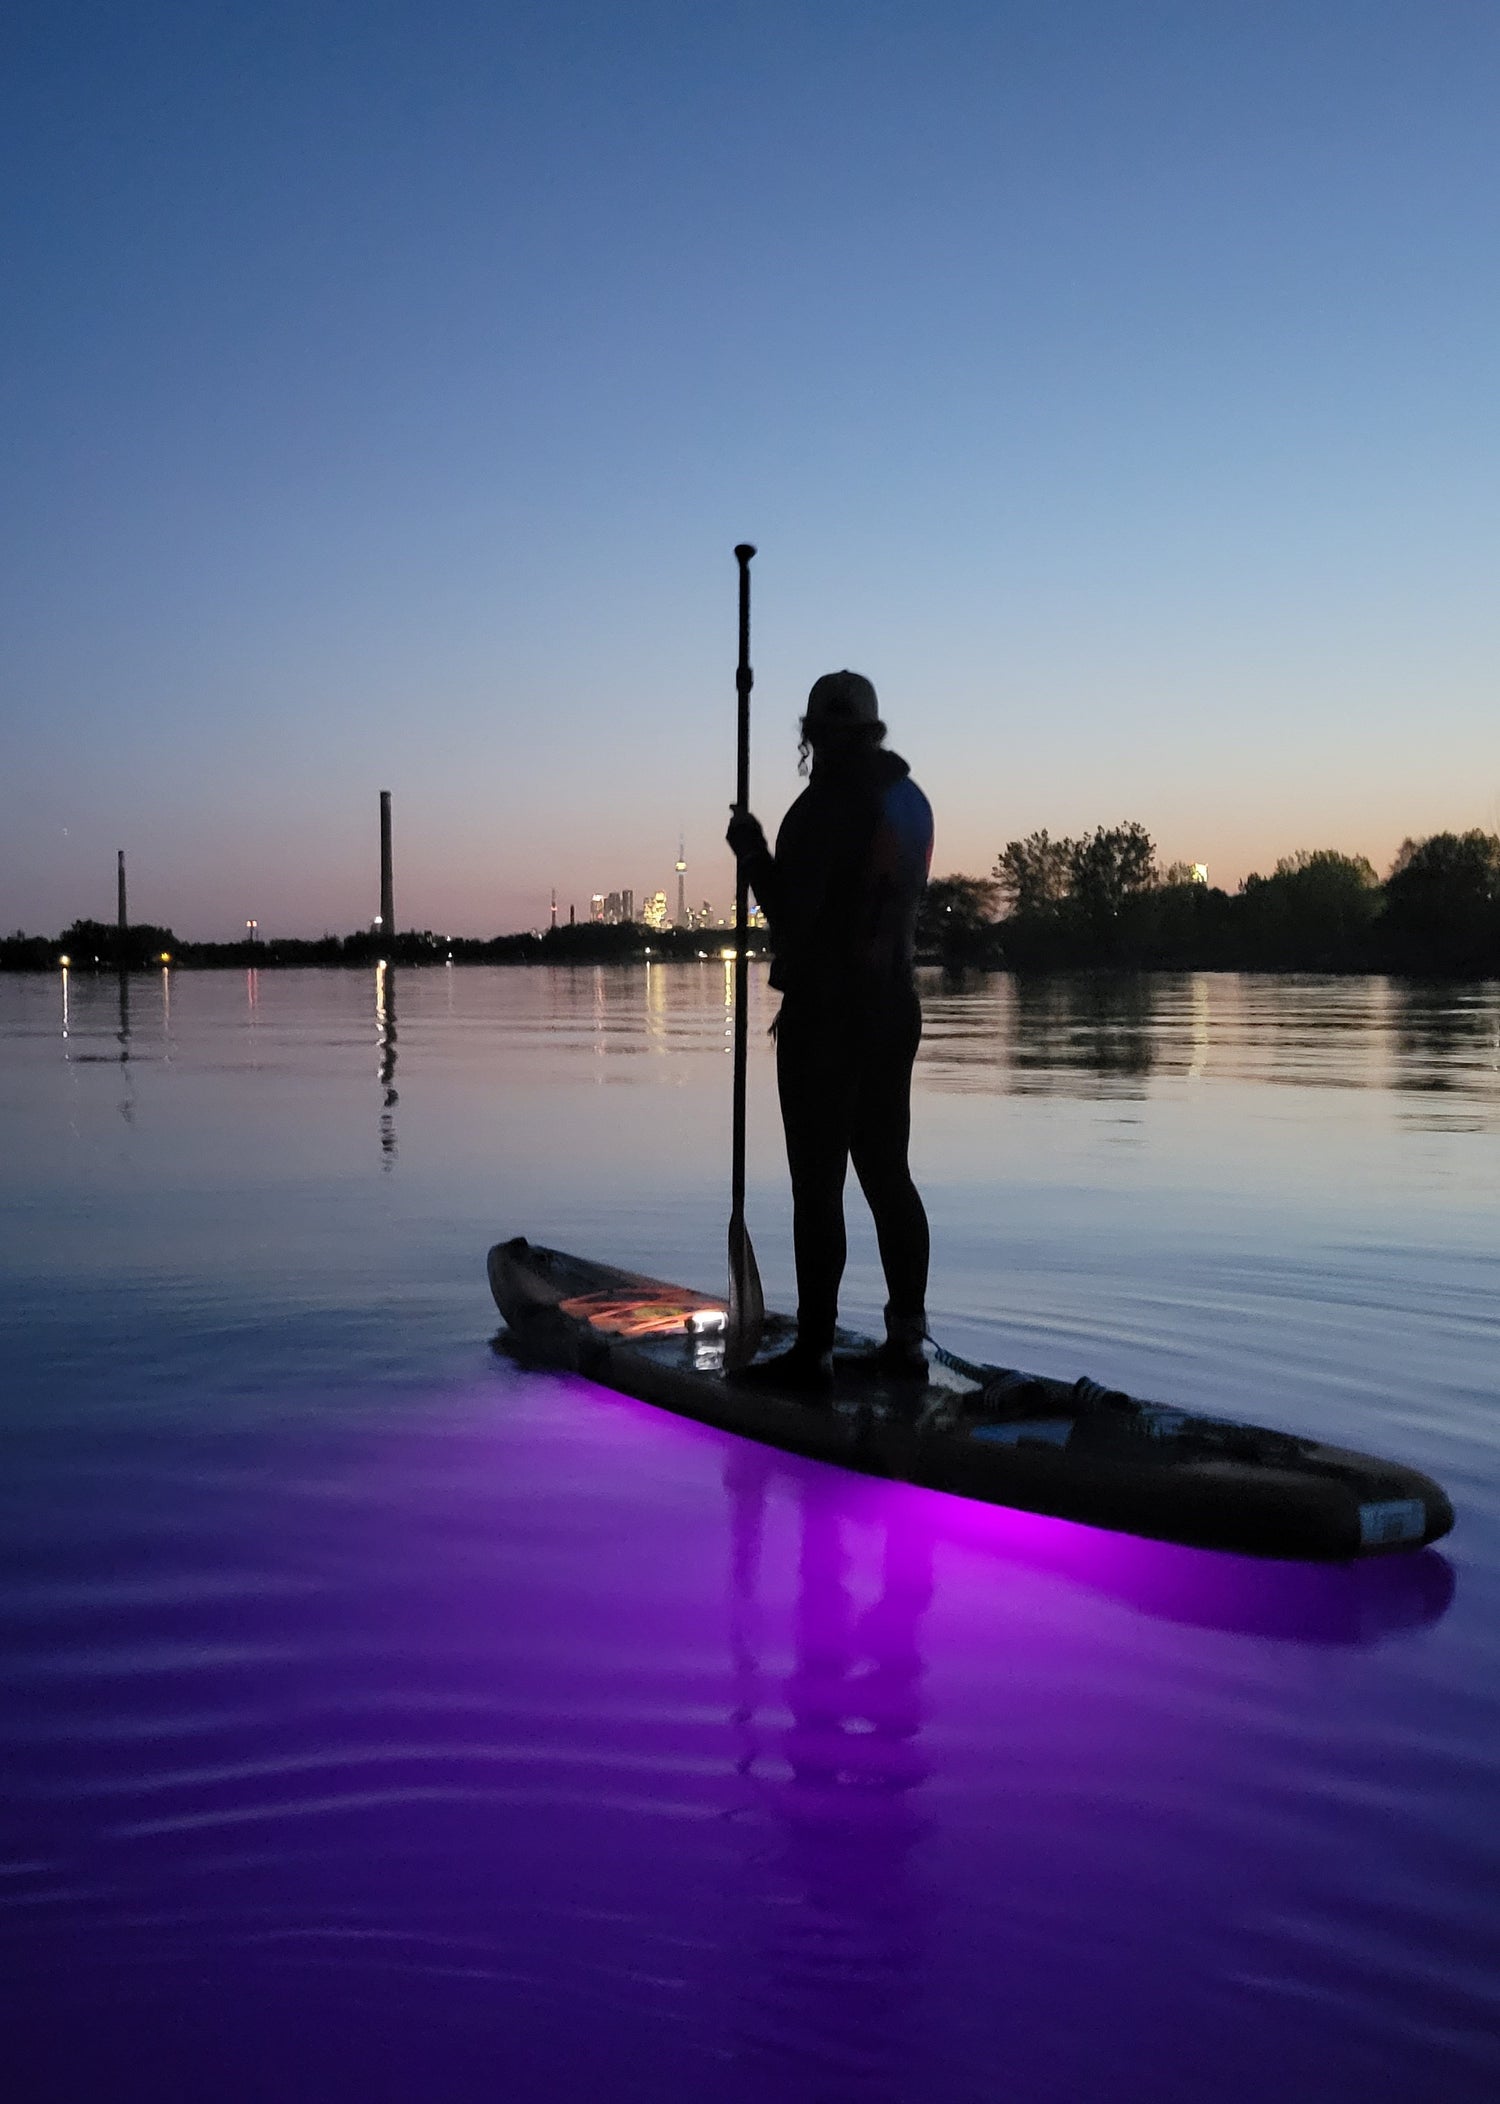 The Aurora Explorer illuminates the water below the paddleboard